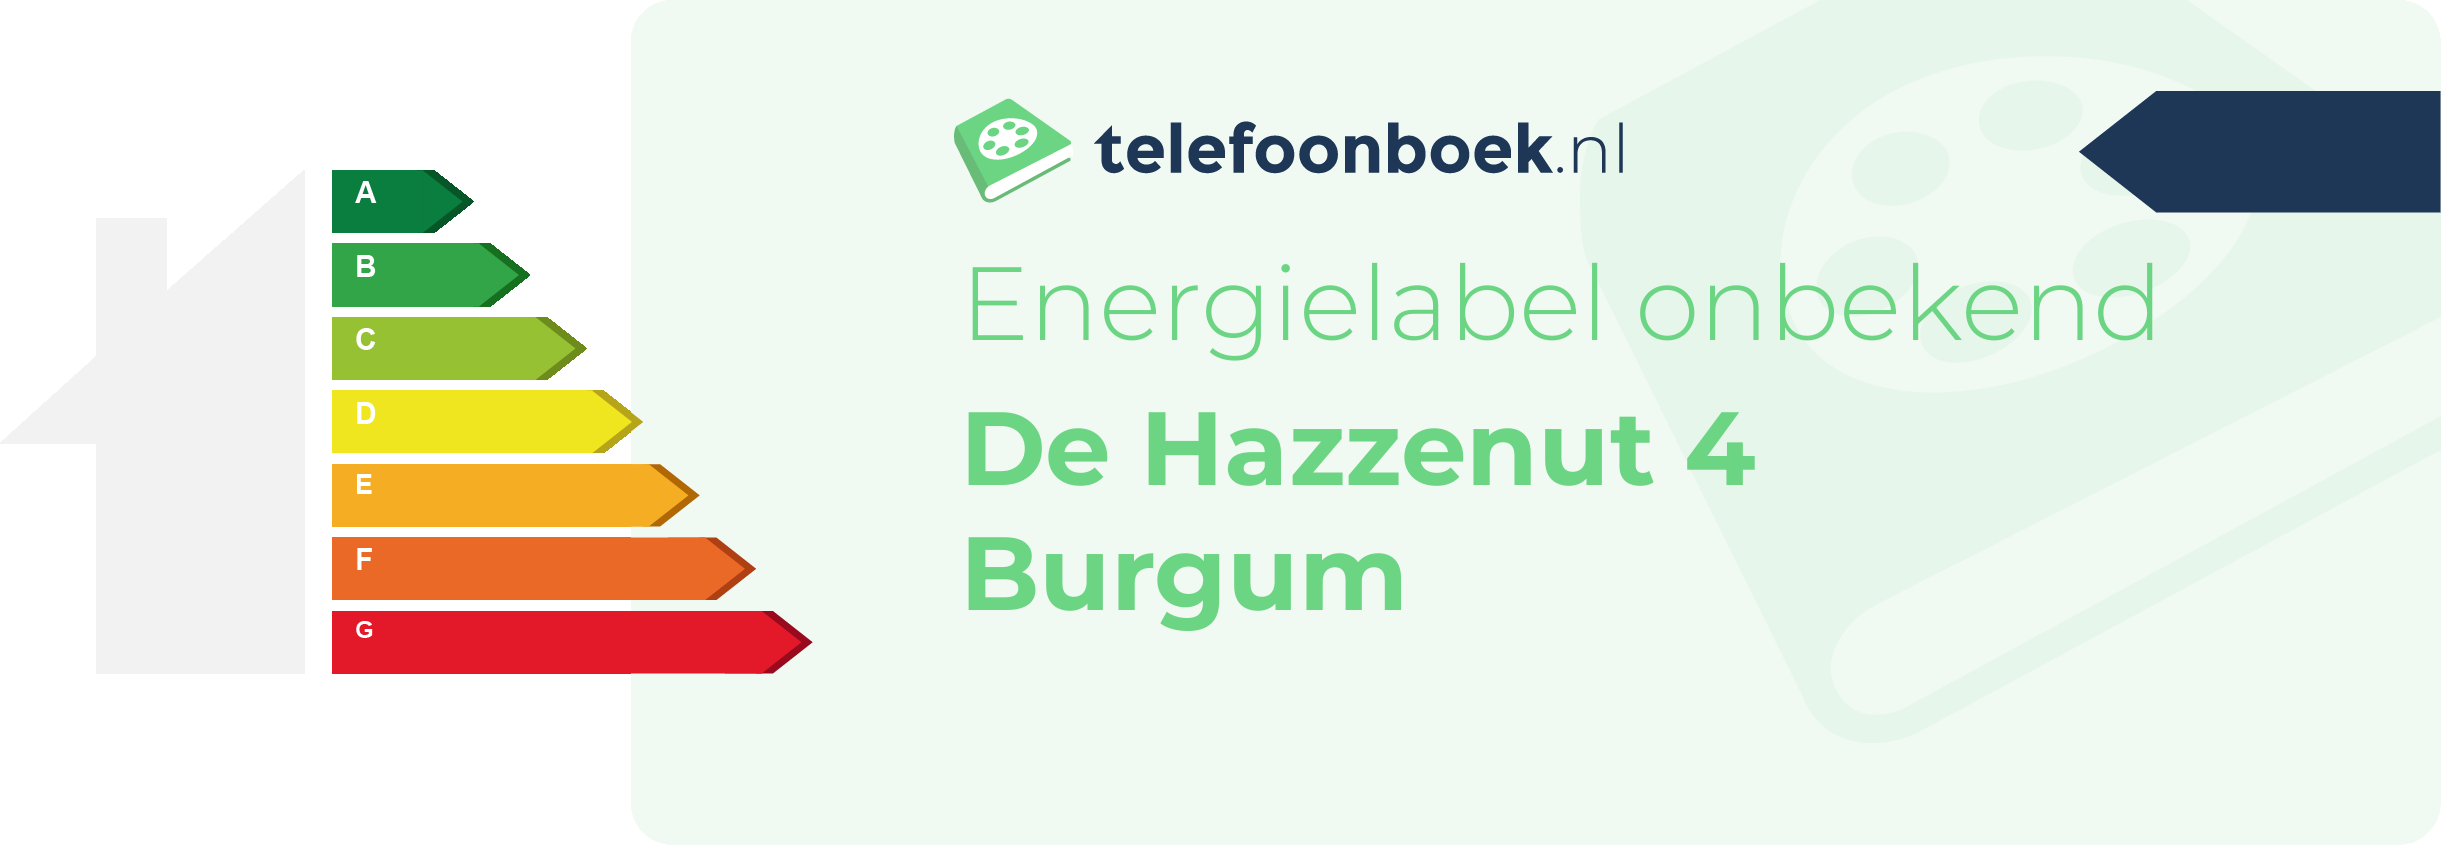 Energielabel De Hazzenut 4 Burgum